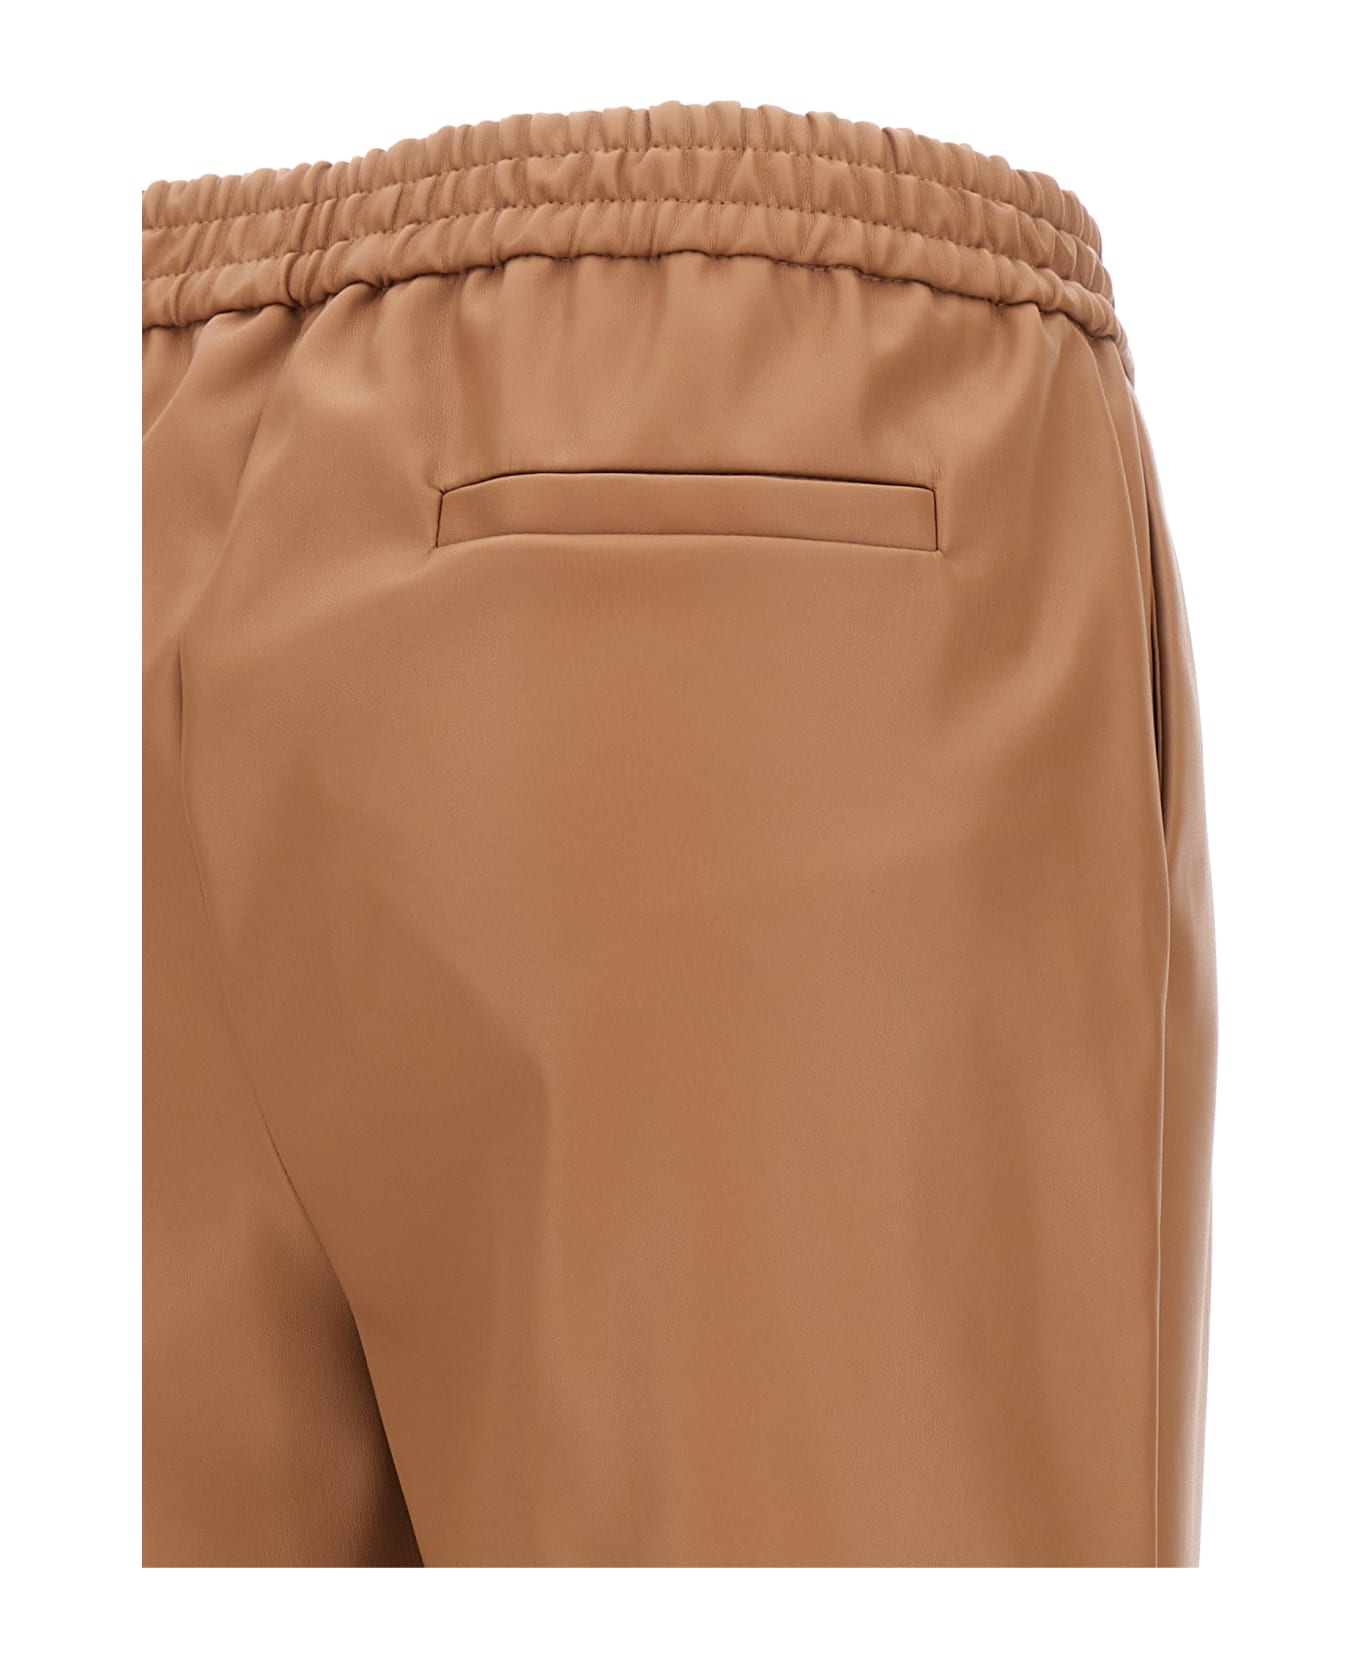 (nude) Eco Leather Pants - Beige ボトムス